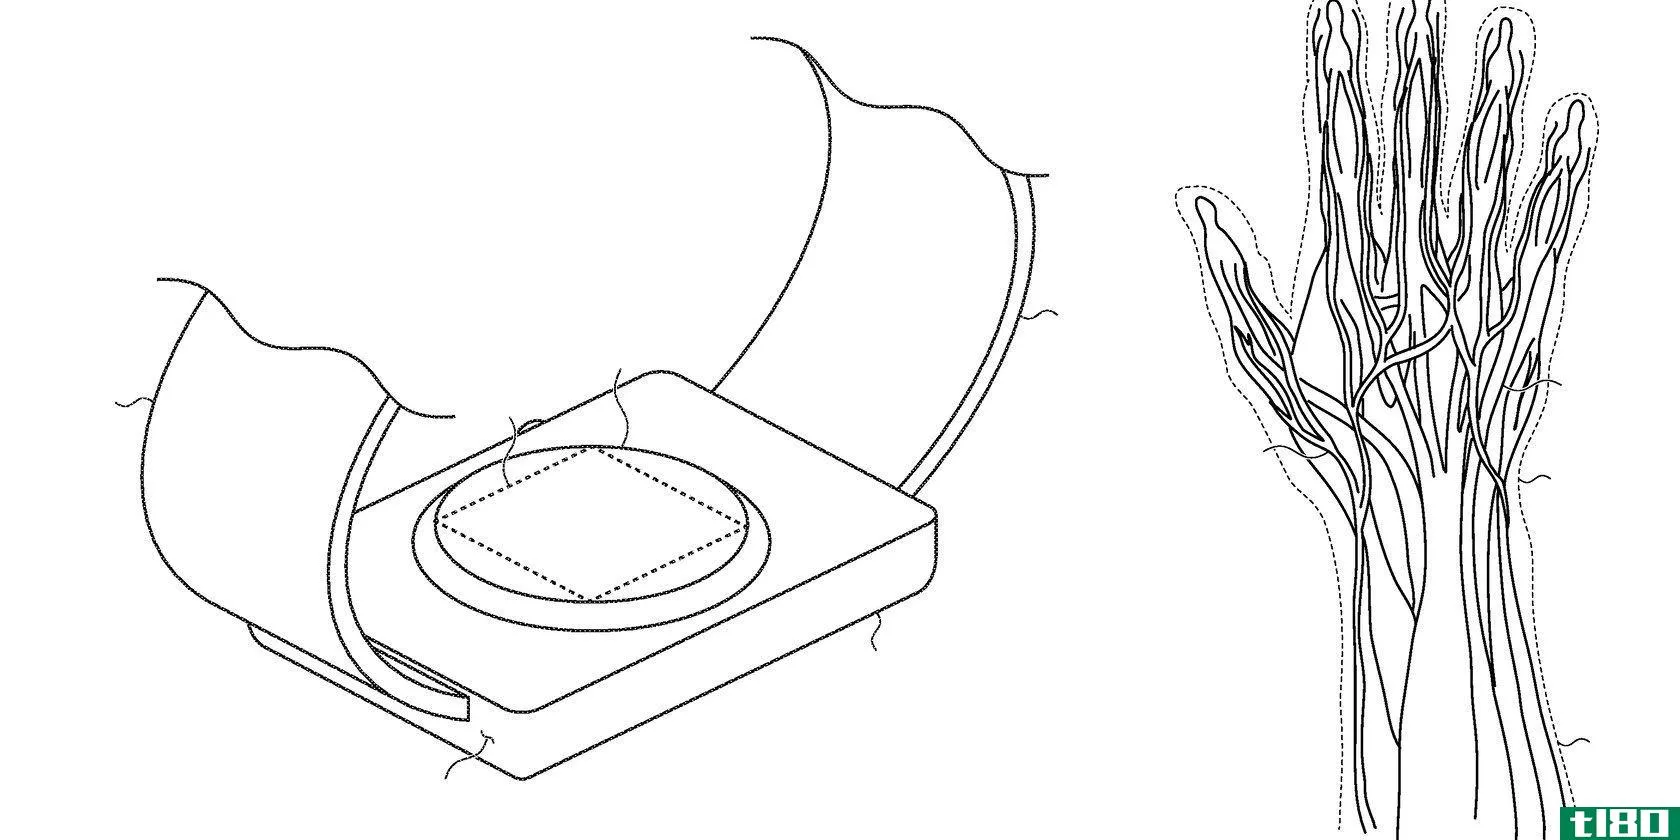 apple-watch-patent-wrist-id-drawing-001